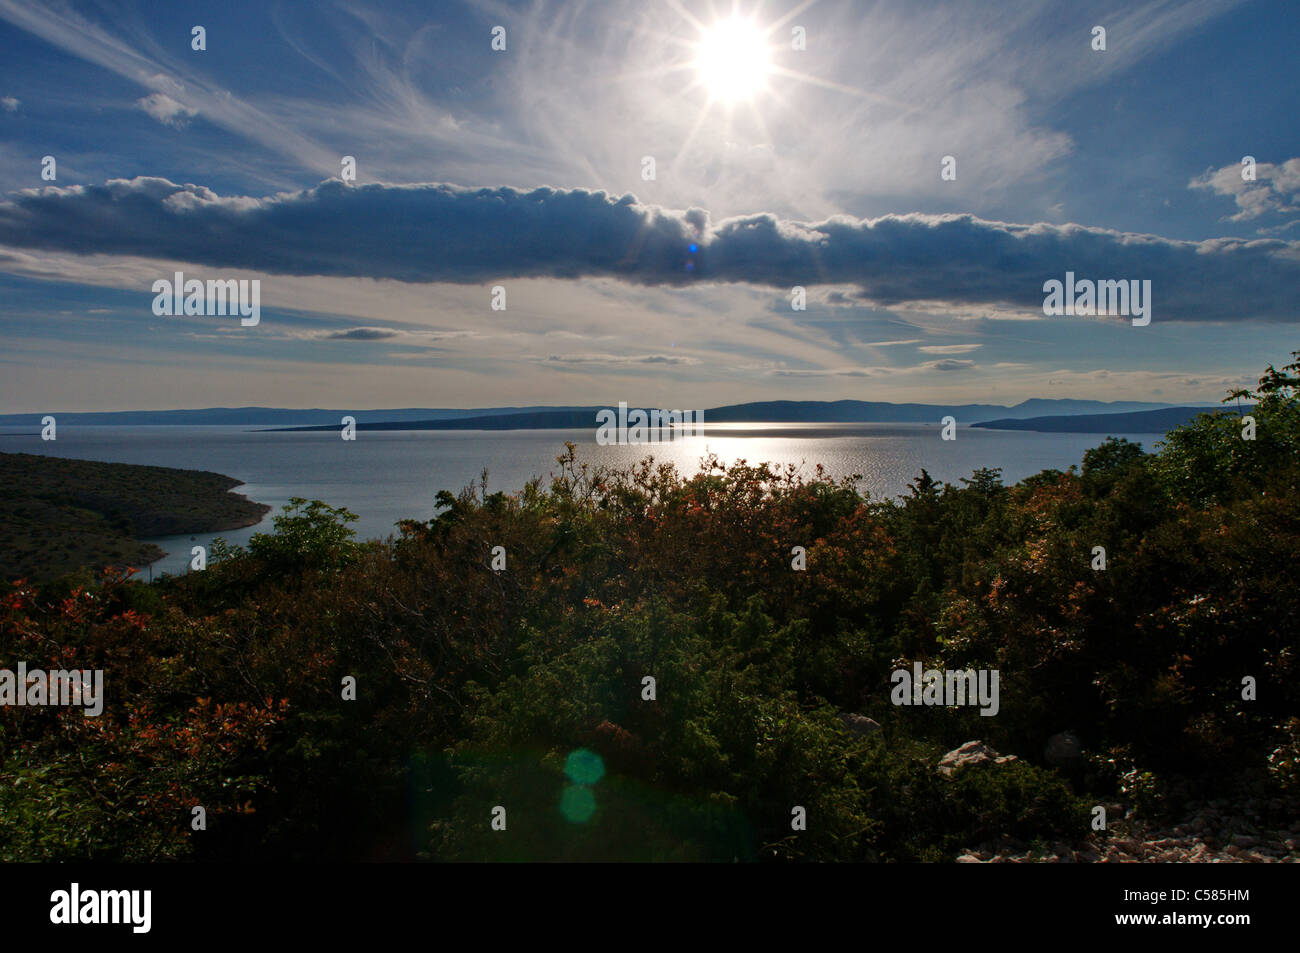 sun, clouds, light, shadow, back light, romantic, athmosperic, calmness, evening, mediterranean, Adria, Croatia, island, islands Stock Photo